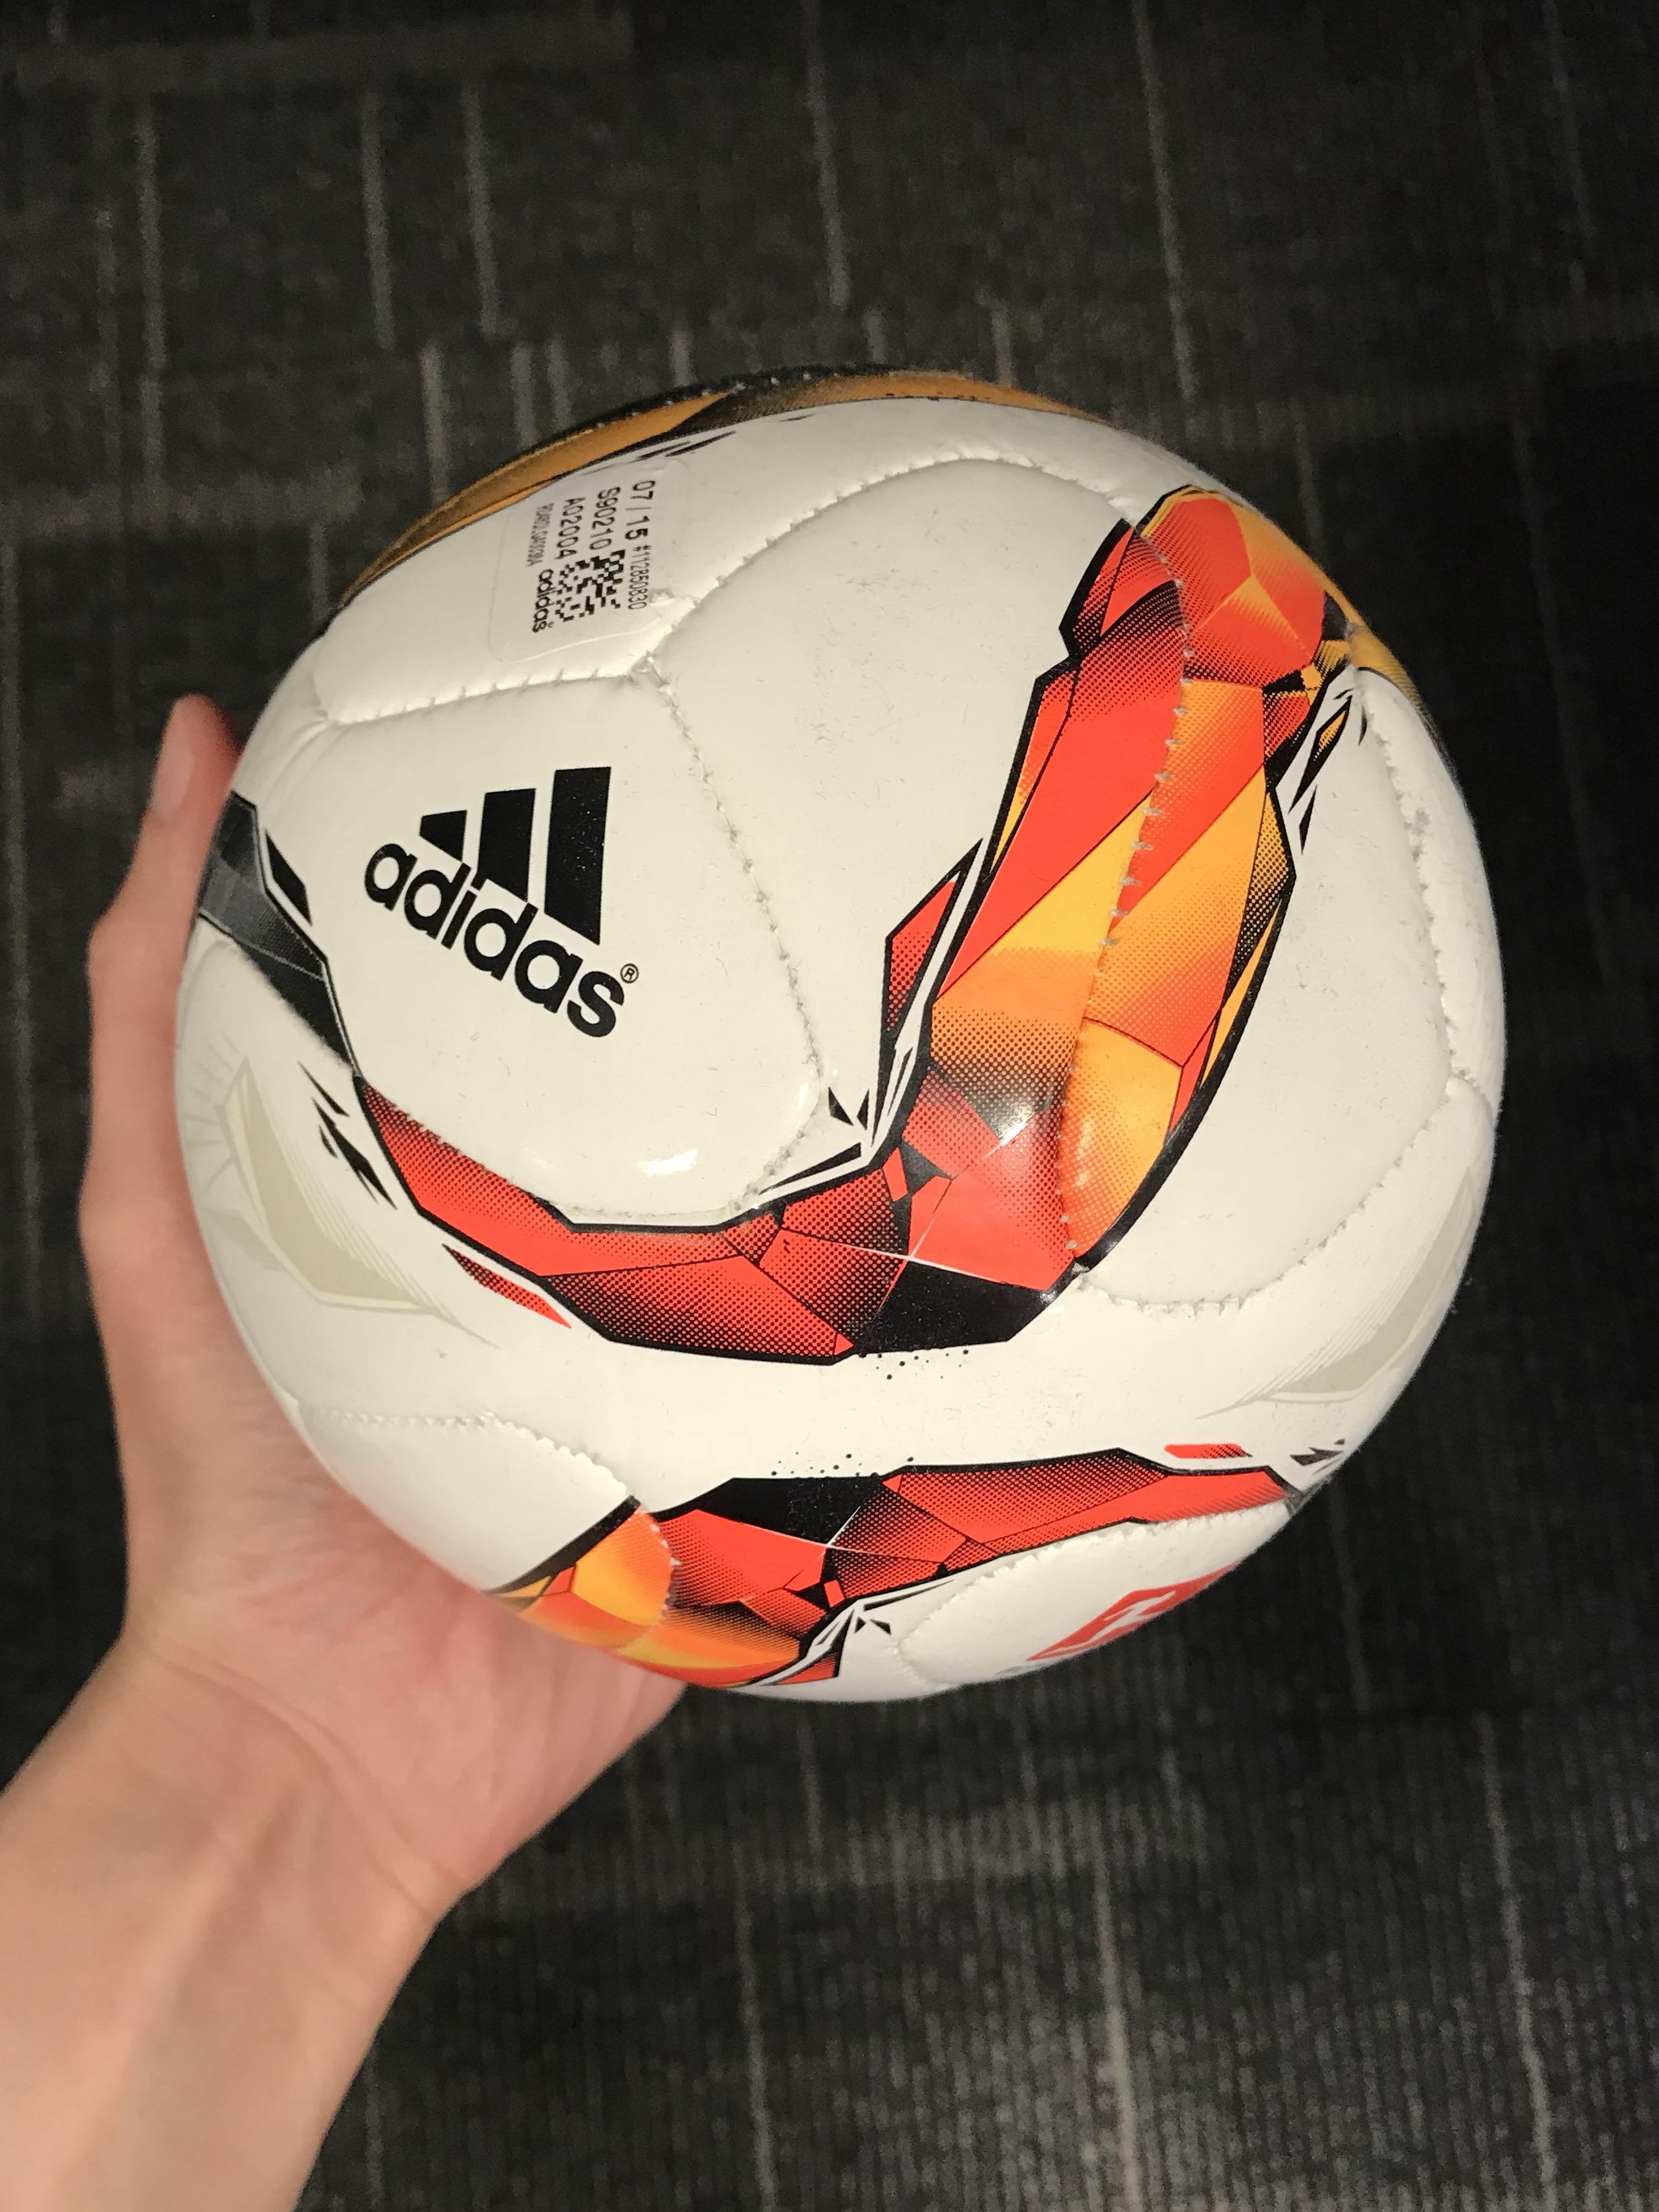 adidas soccer ball size 1